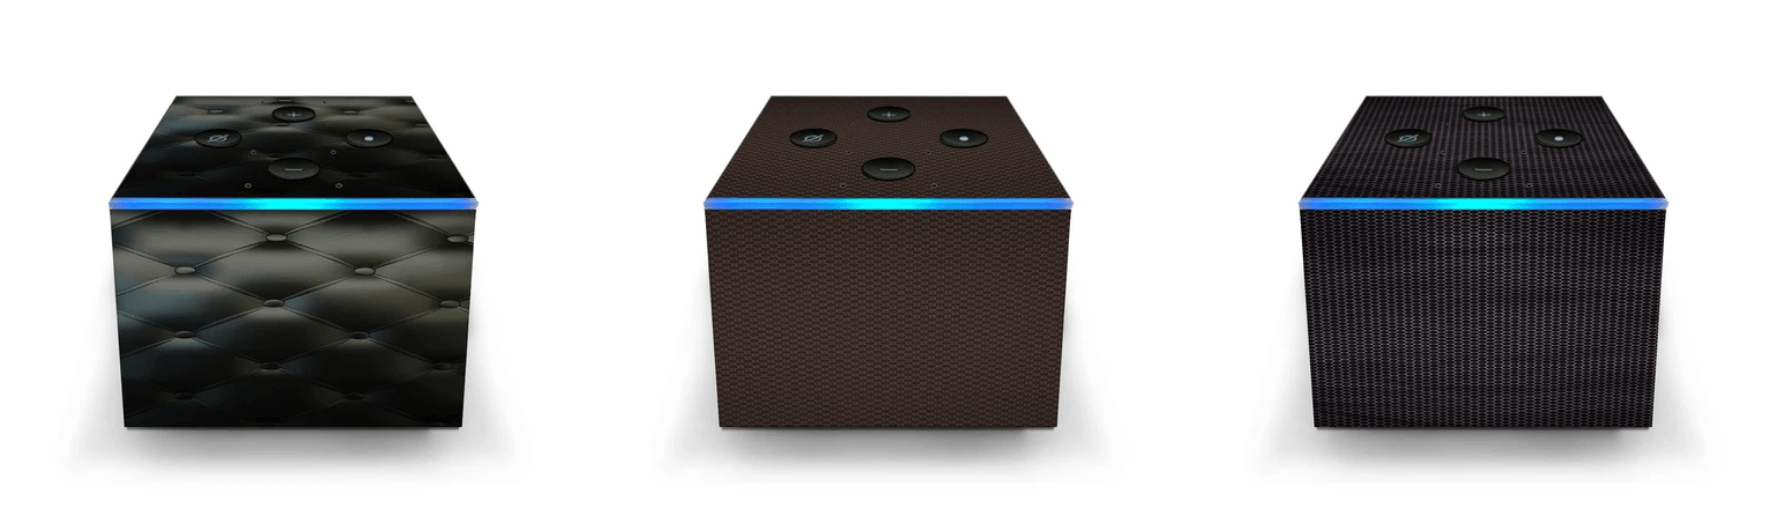 Amazon Fire TV Cube - itsaskin.com